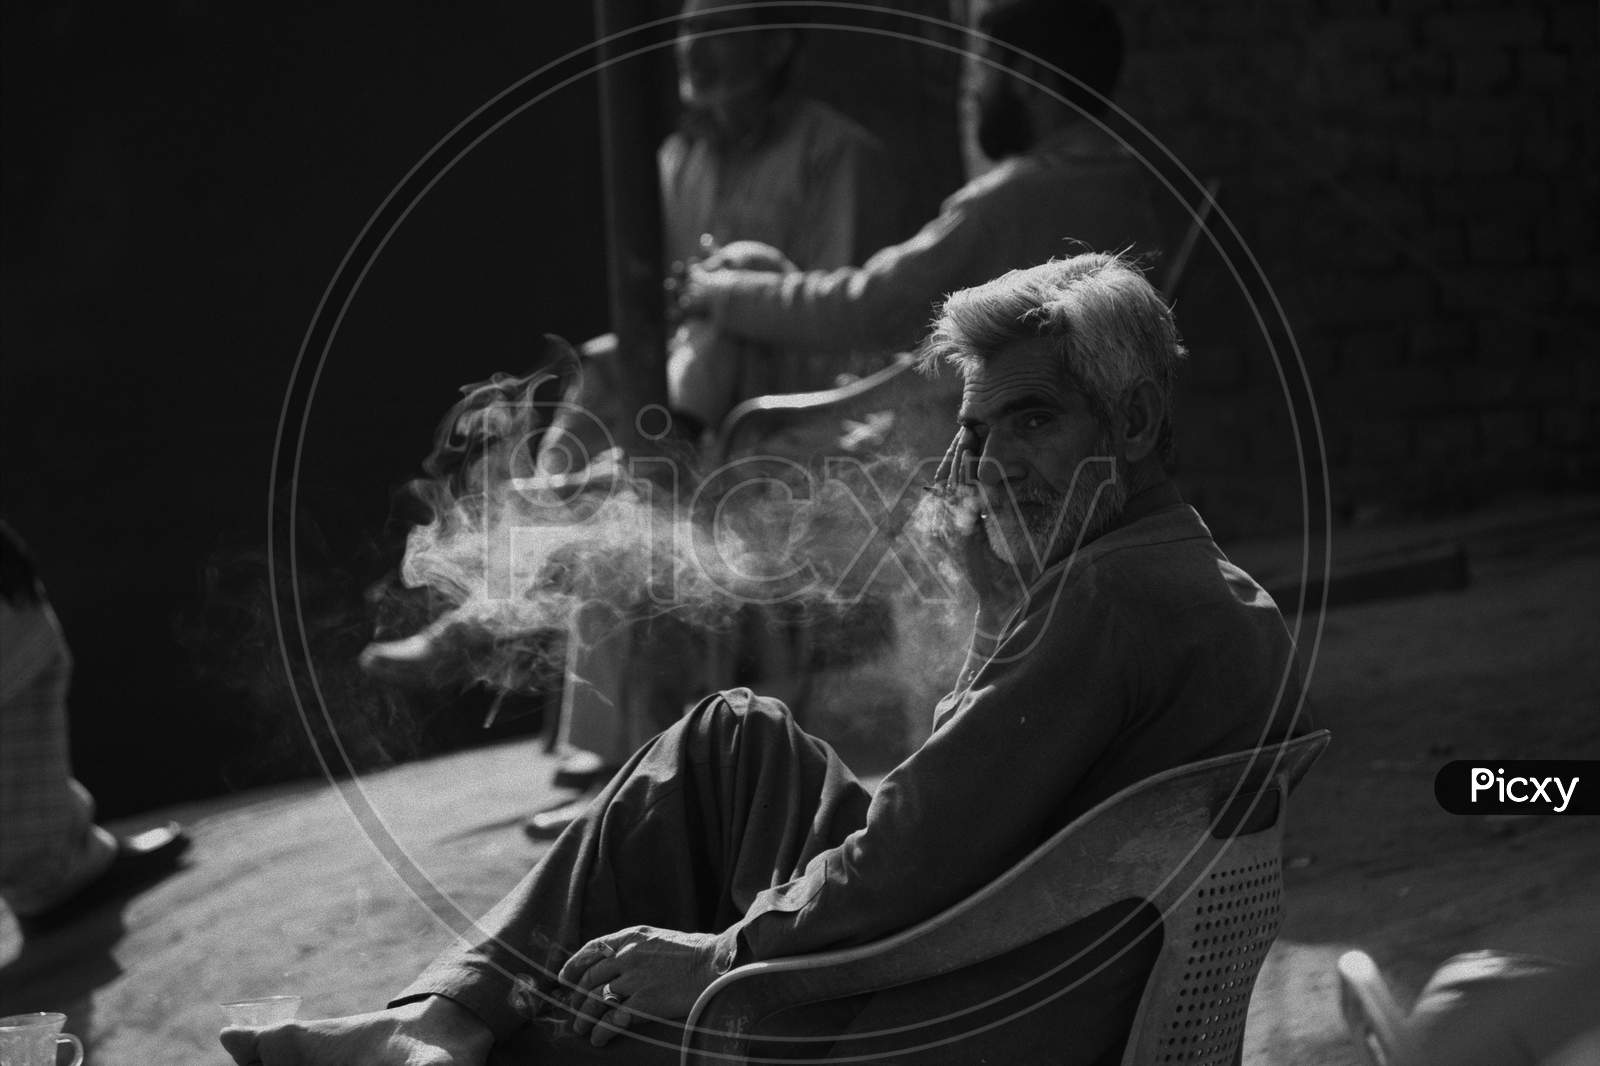 a smoking depress man